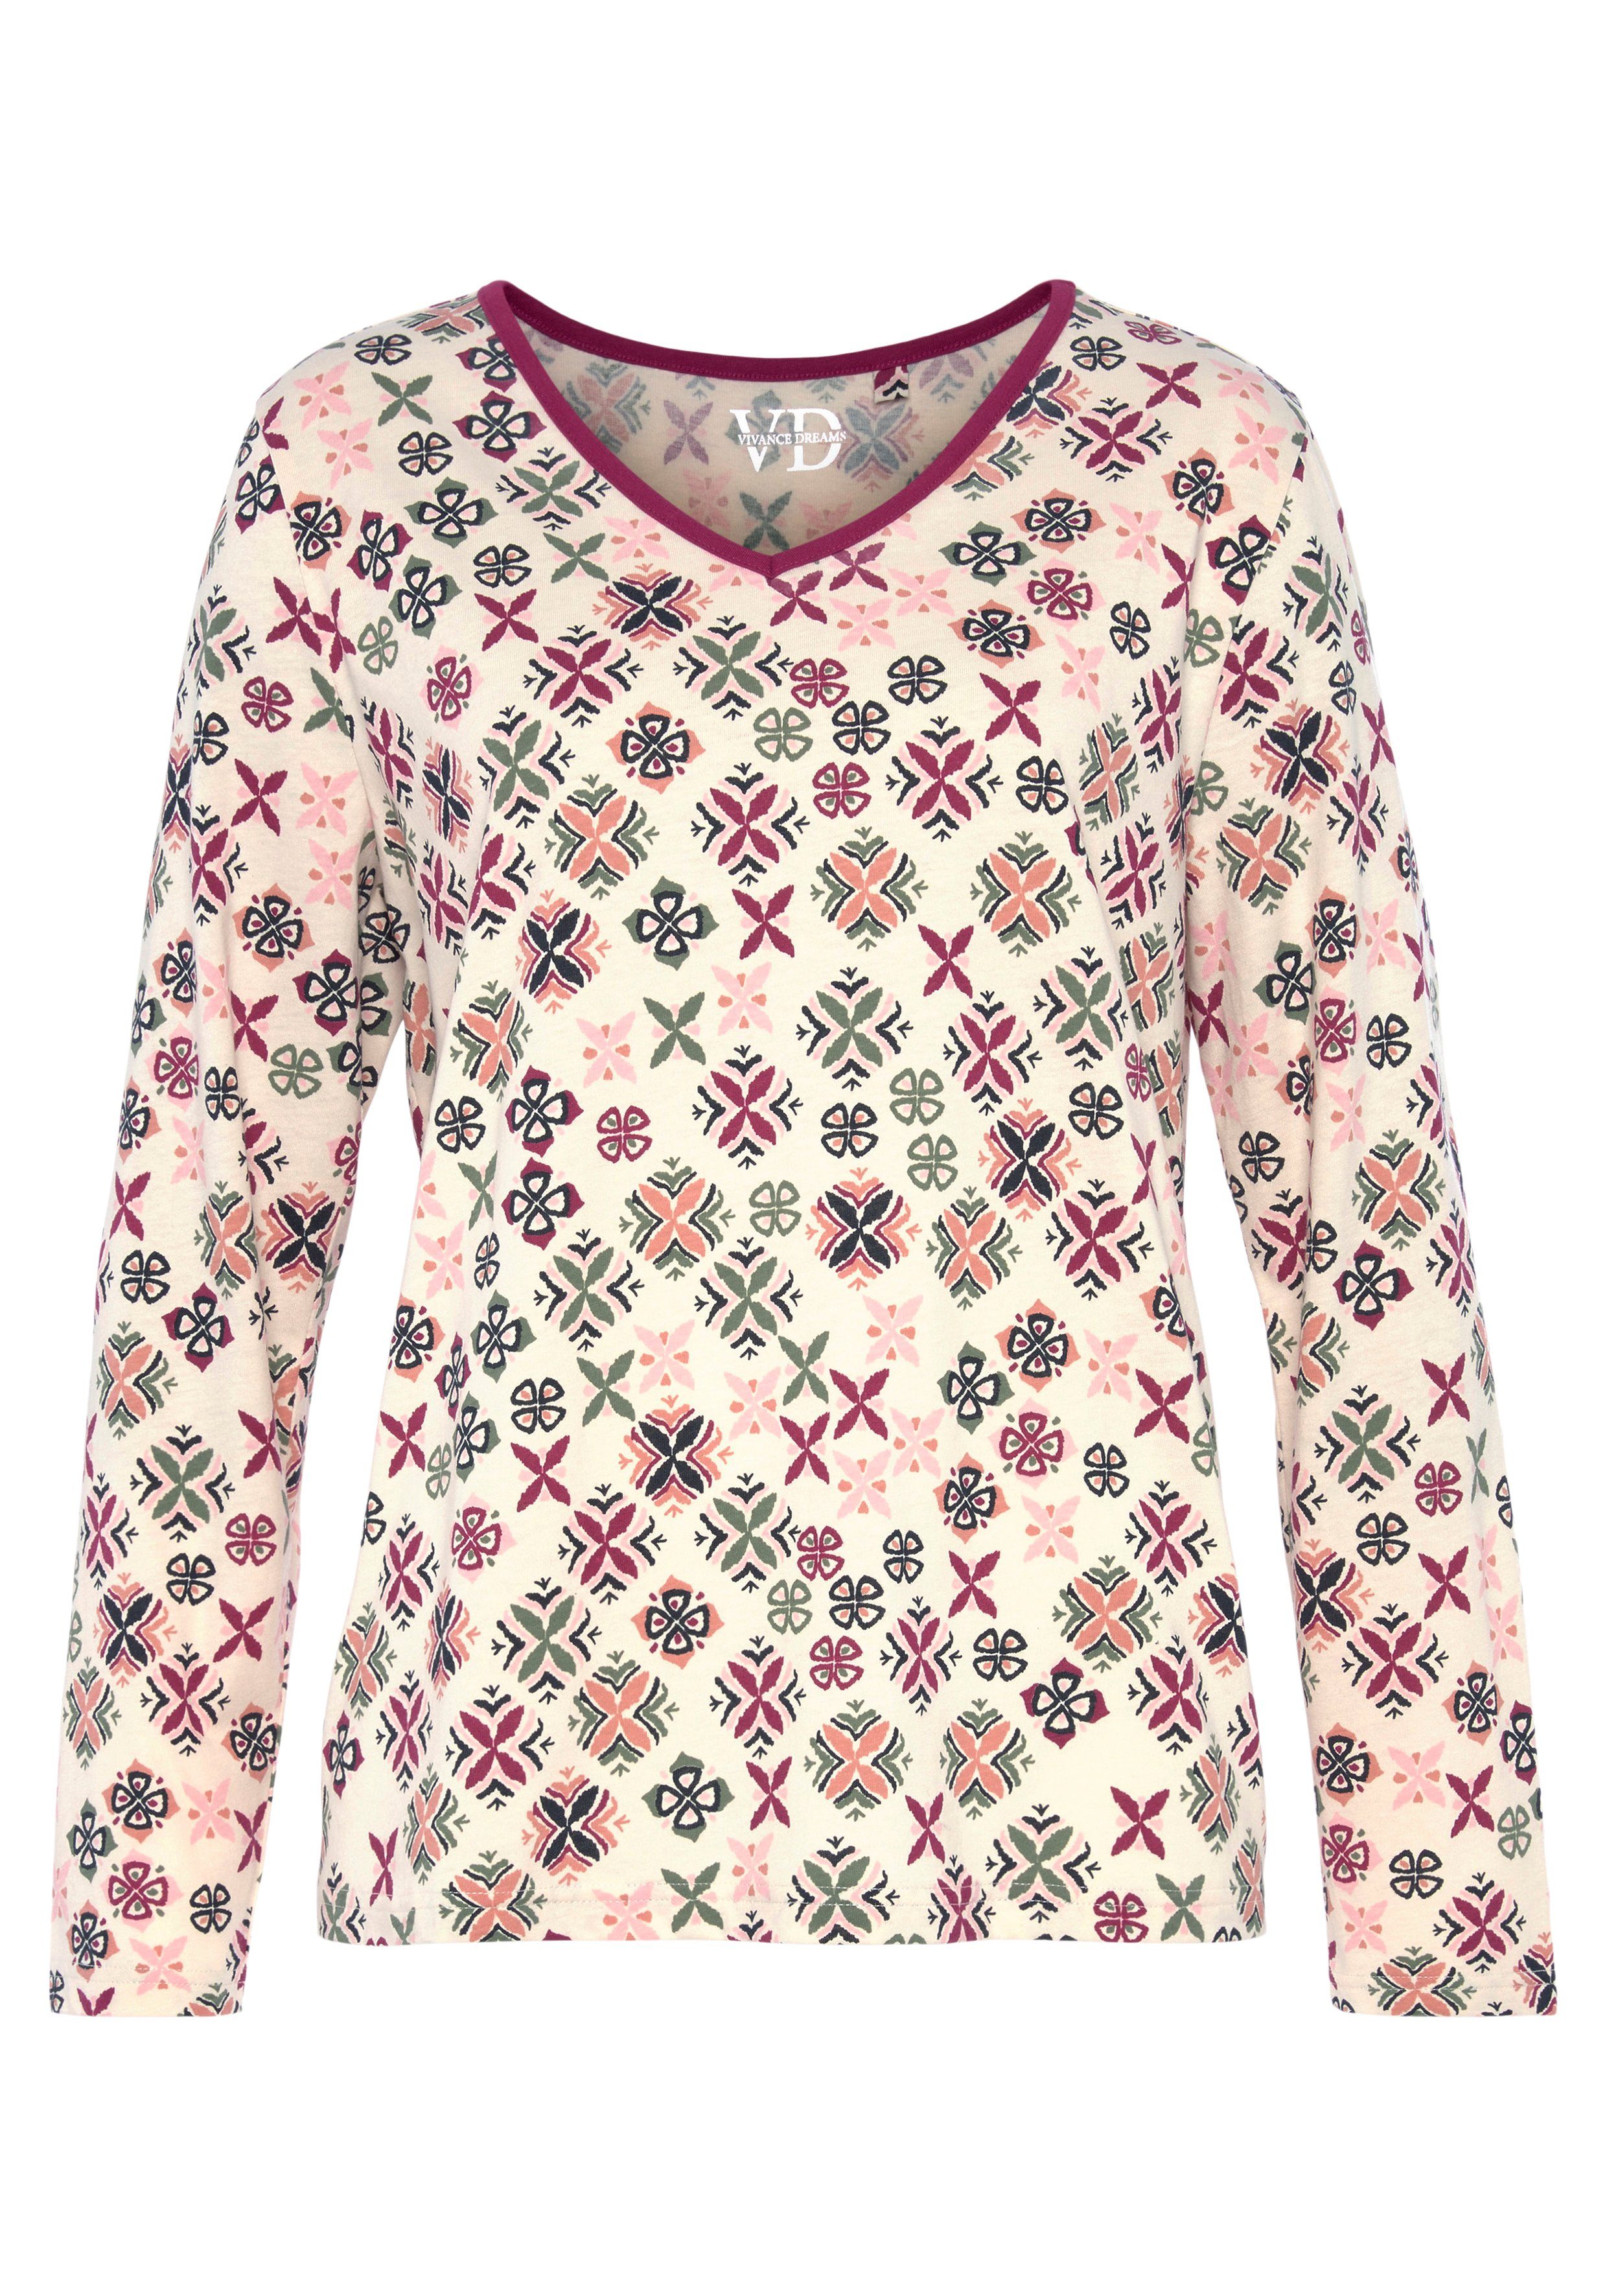 Dreams Vivance mit 2 tlg) (Packung, Alloverdruck grafisch-floralem burgunder-gemustert Pyjama